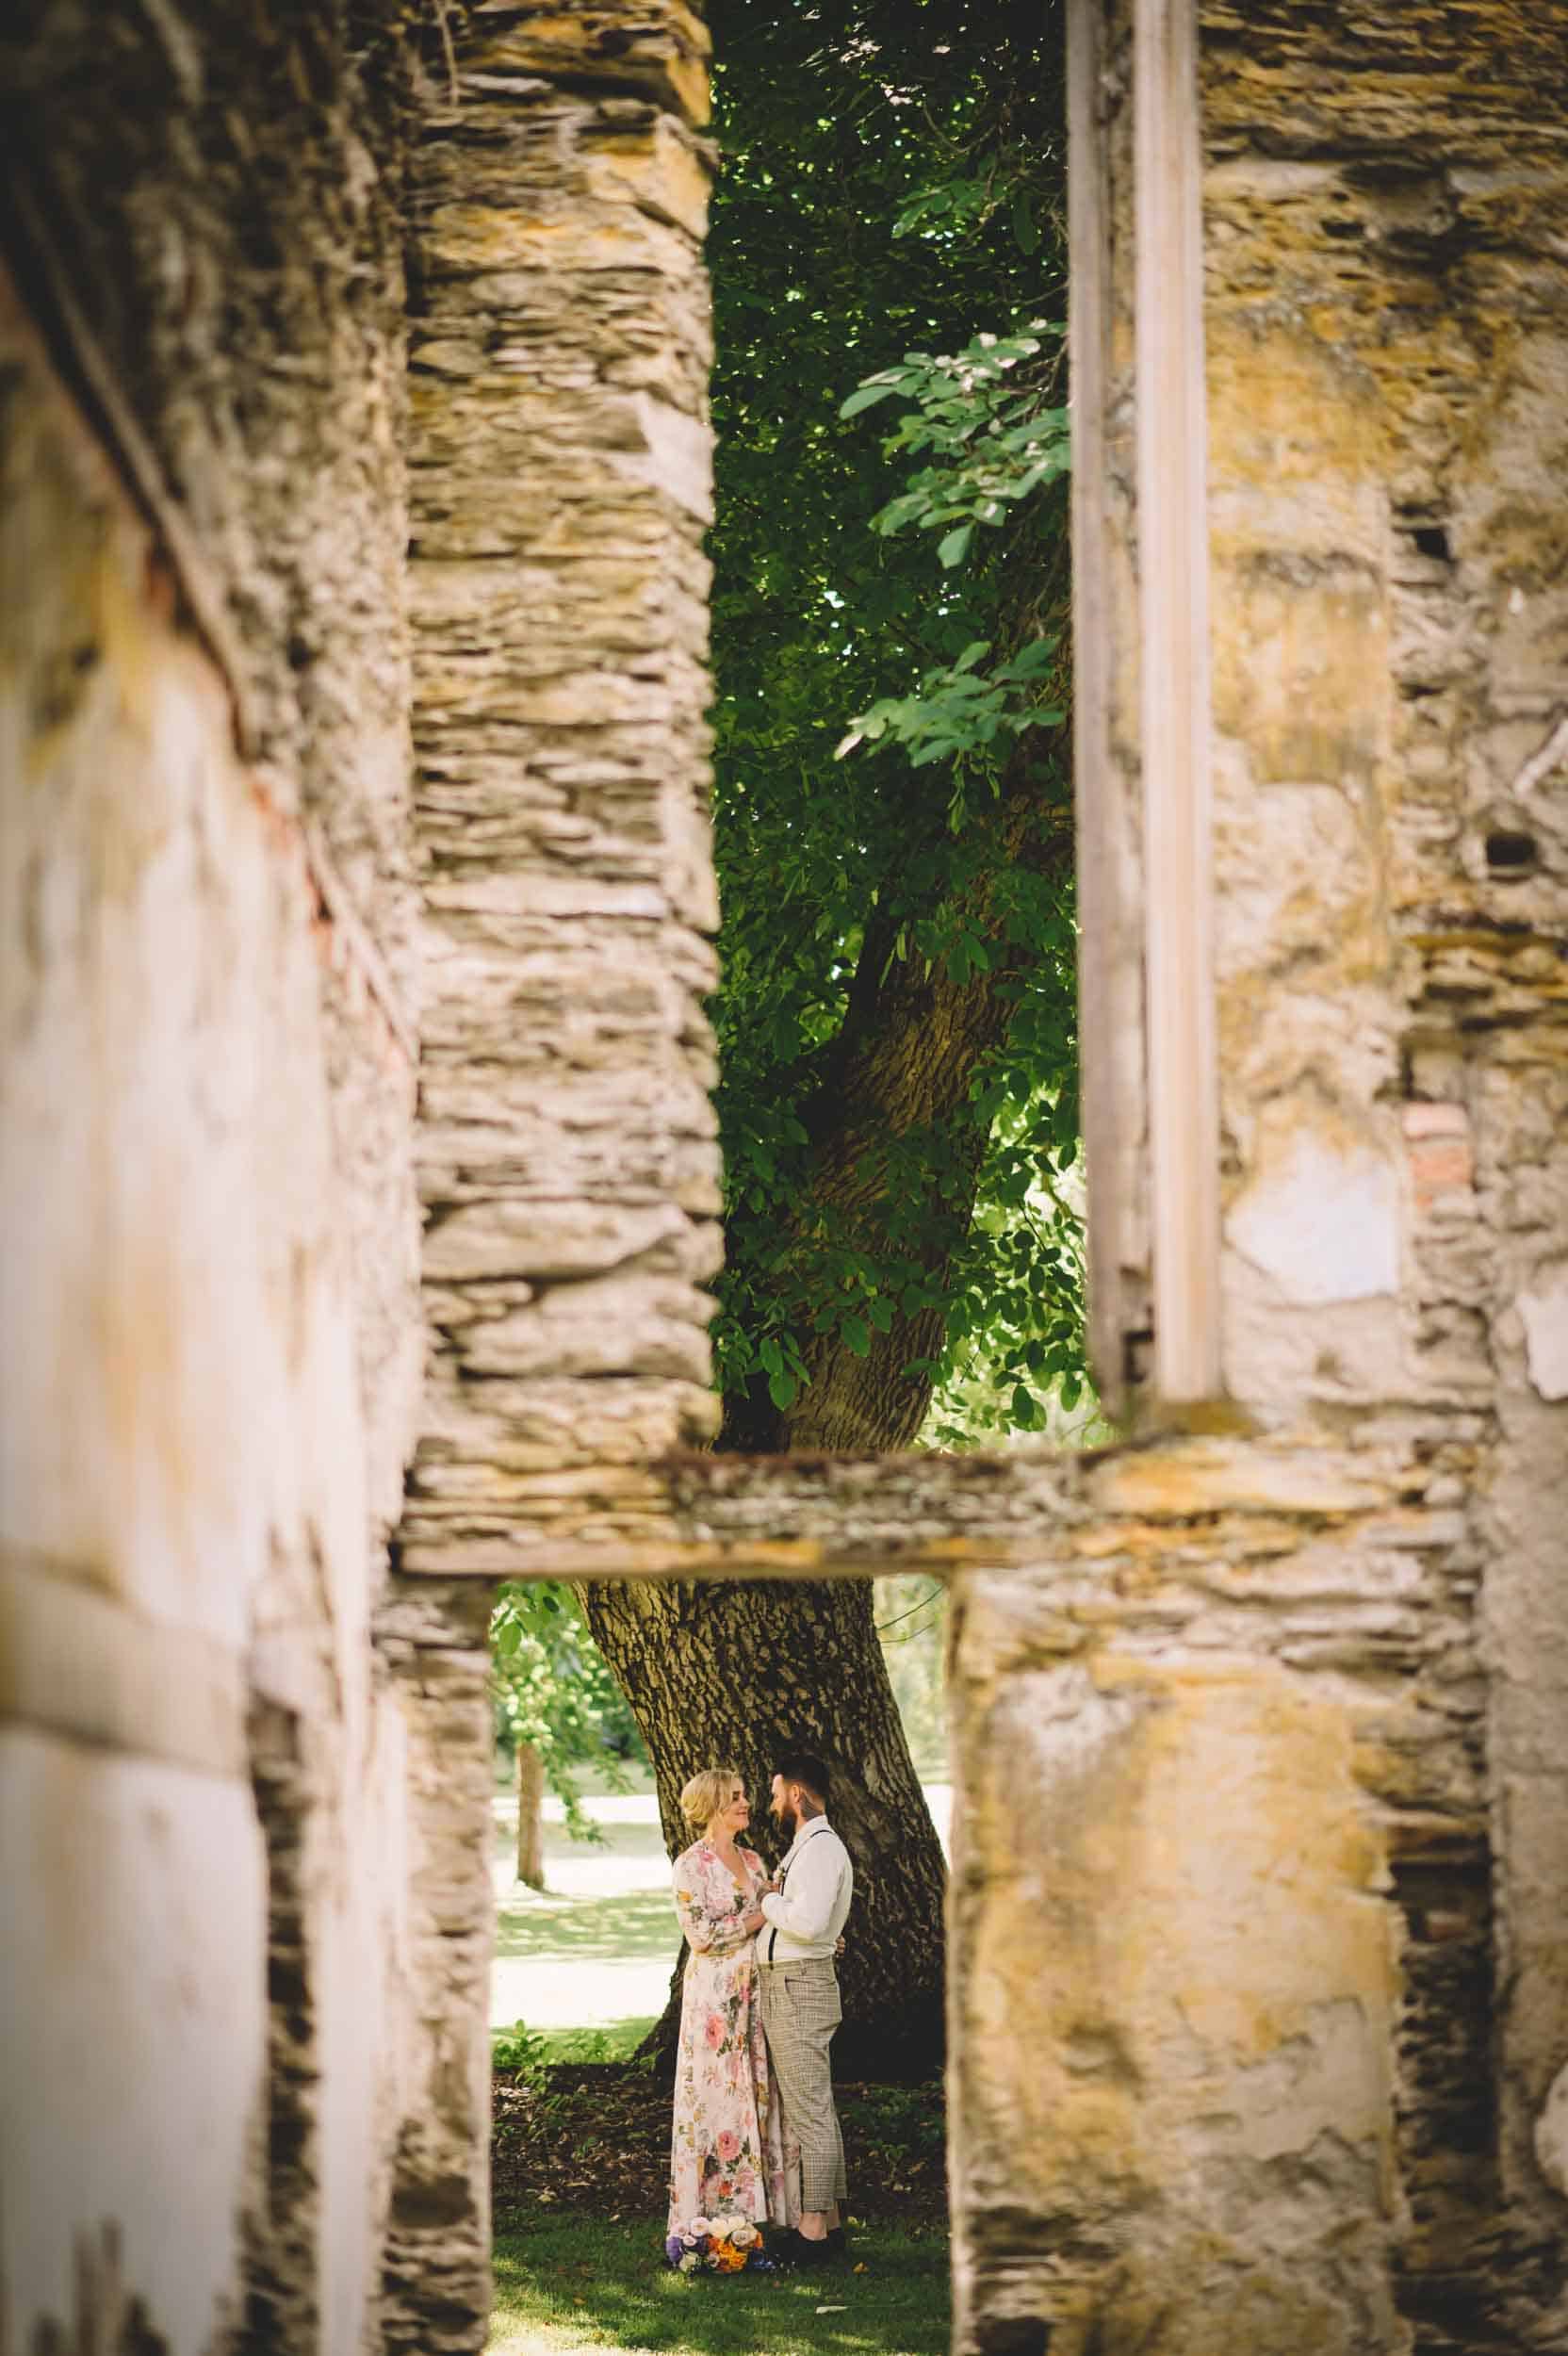 Nick & Nina's Thurlby Domain Elopement bride & groom photos old stone ruins